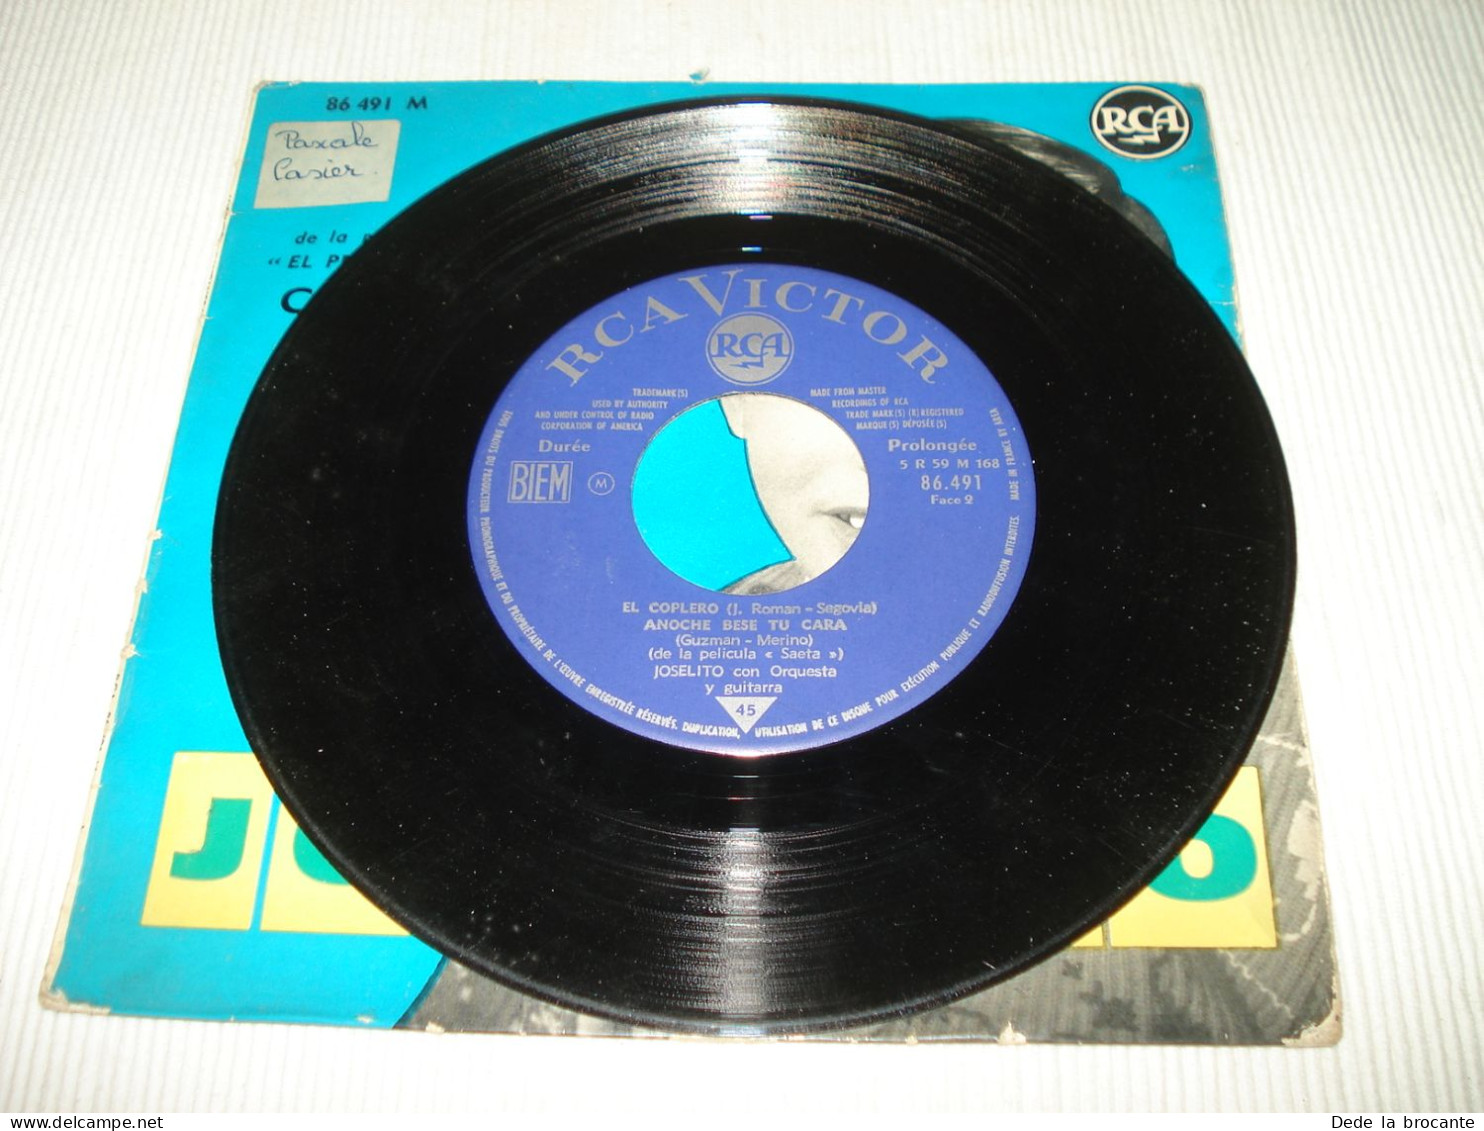 B12 / Joselito – Musique Film Campanera – EP - RCA – 86.491 - FR 1963 -  EX/VG+ - Soundtracks, Film Music